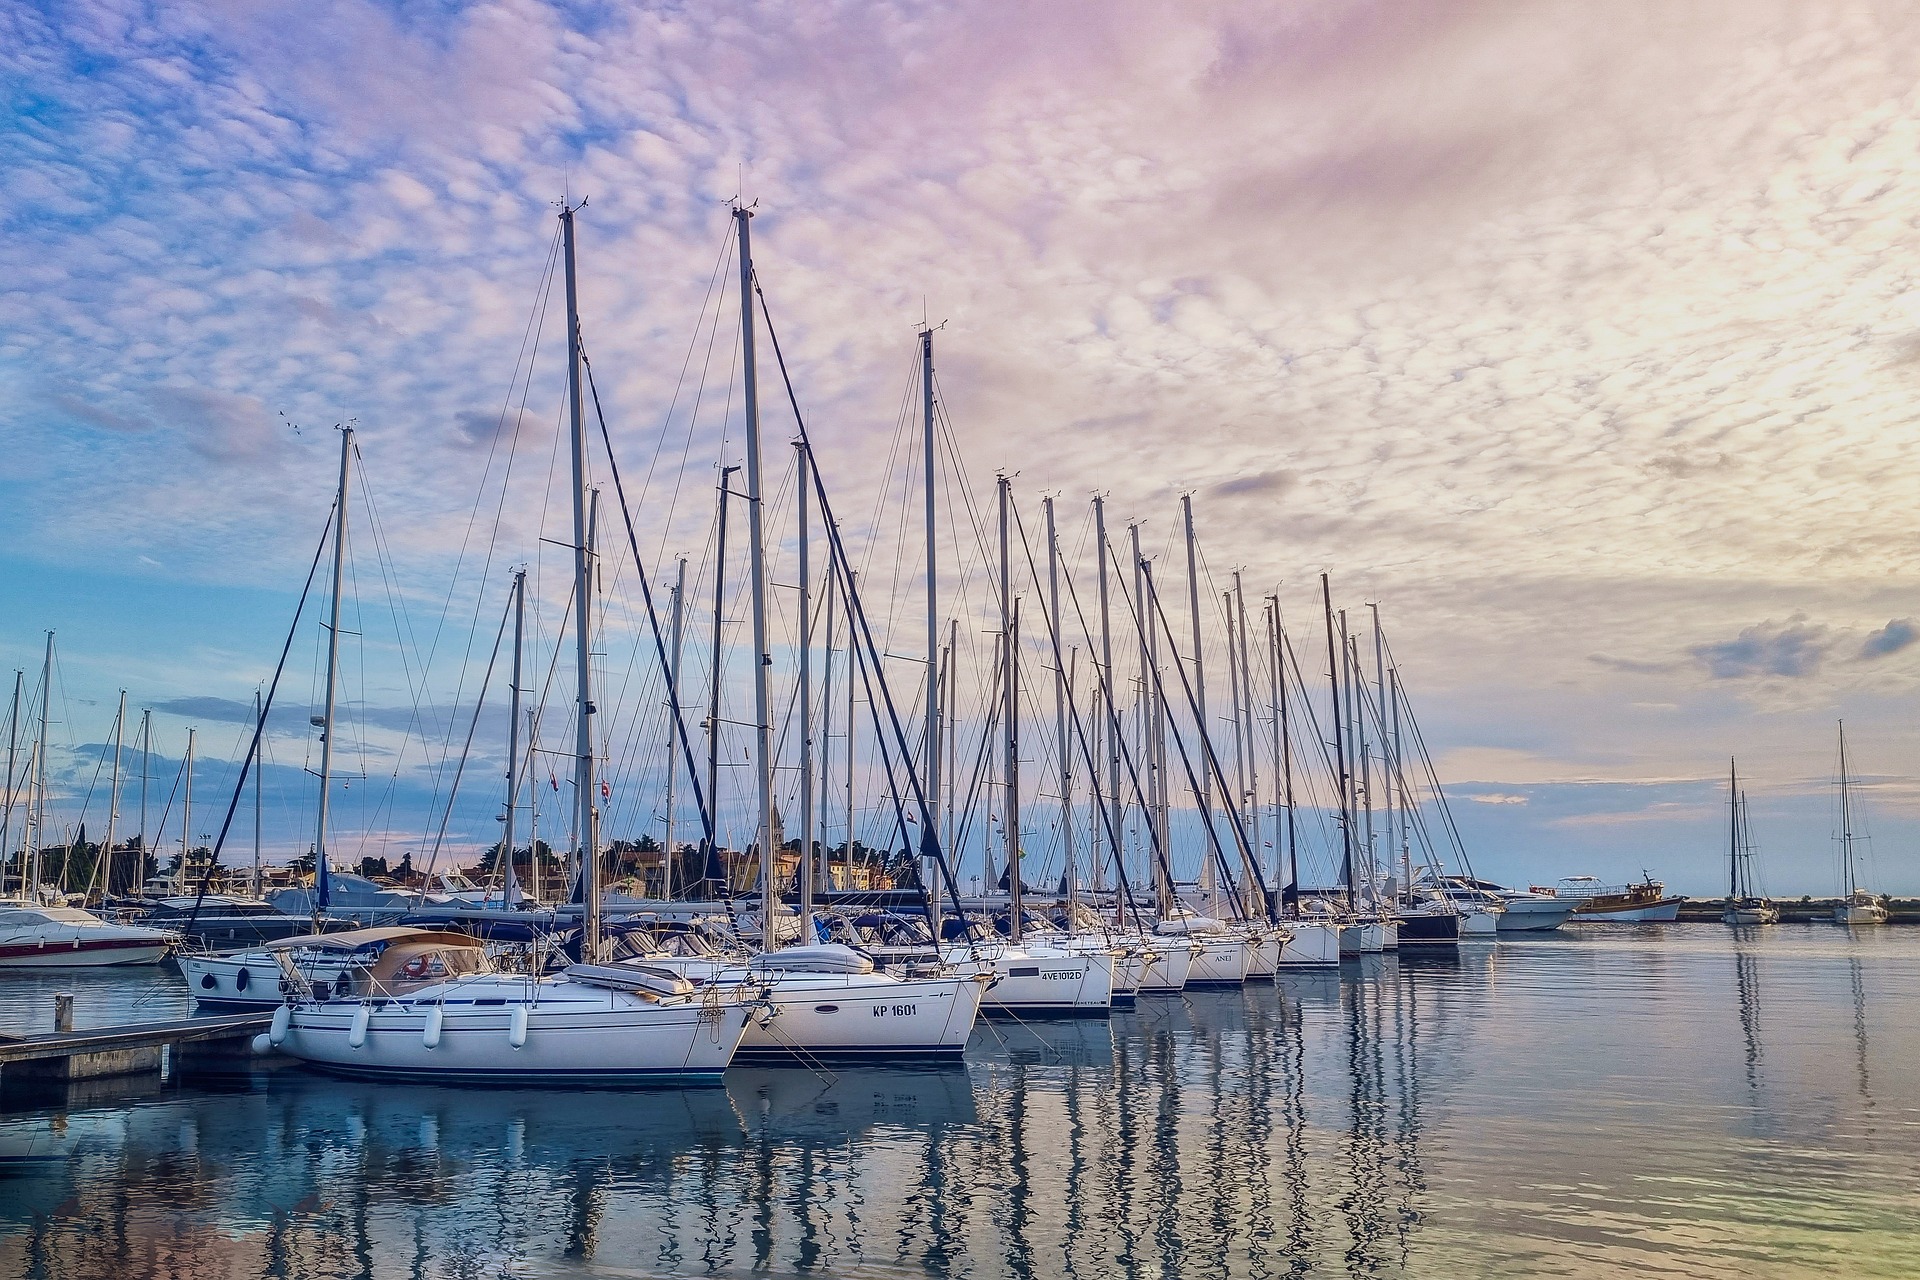 The Best Marinas In Ibiza | Top 4 Marinas in Ibiza, Spain